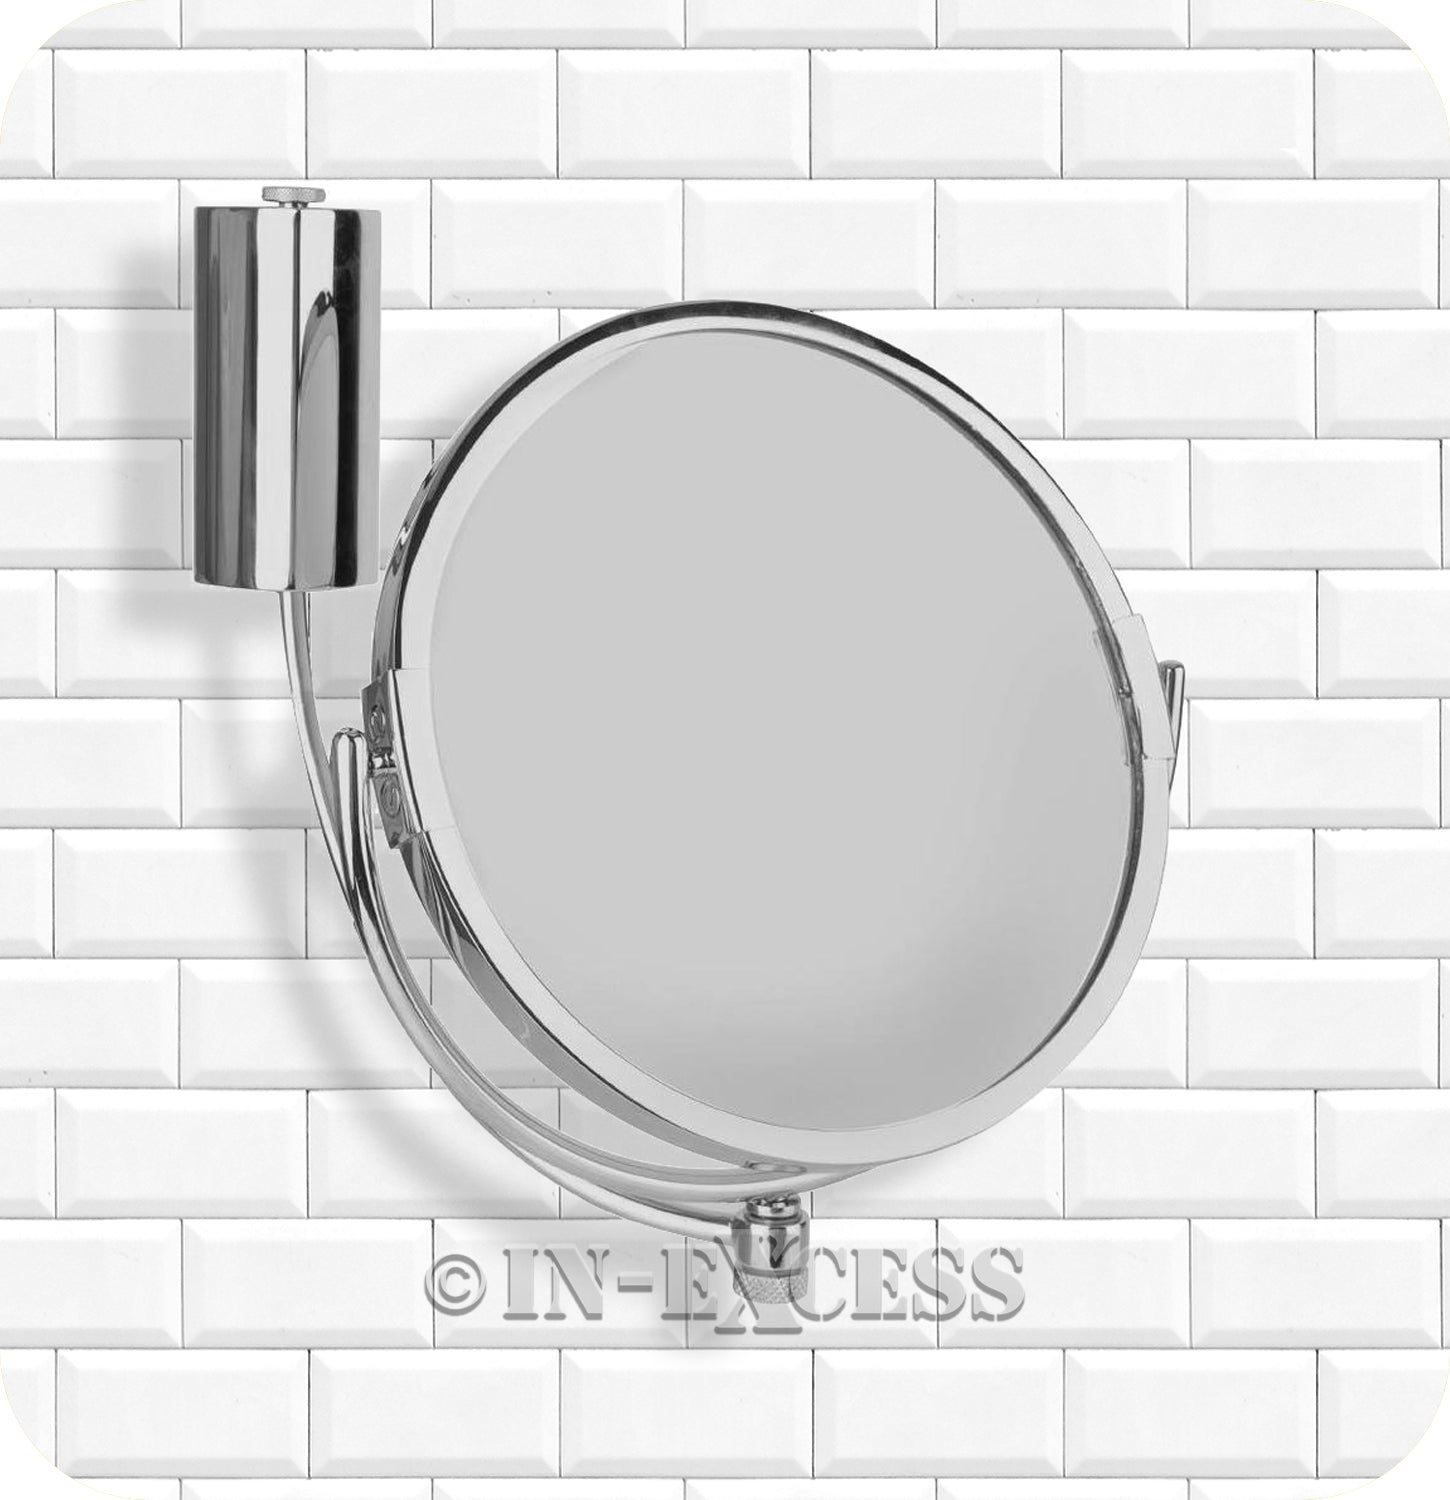 Metlex Majestic Bathroom Accessories Shaving & Make-up Beauty Swivel Mirror - Chrome Finish